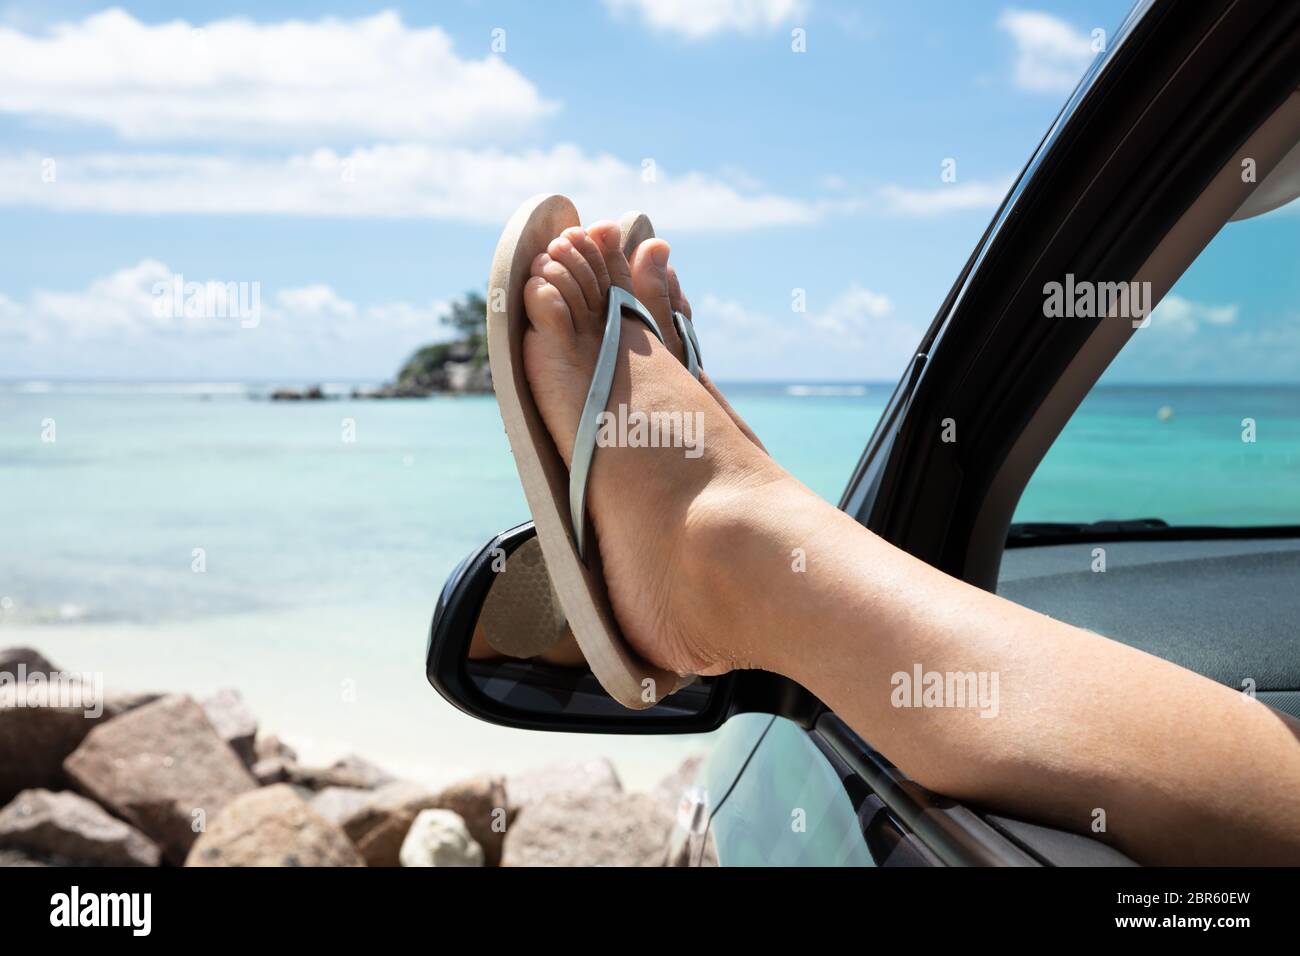 https://c8.alamy.com/comp/2BR60EW/close-up-of-womans-feet-wearing-flip-flops-out-of-car-window-near-the-sea-at-beach-2BR60EW.jpg